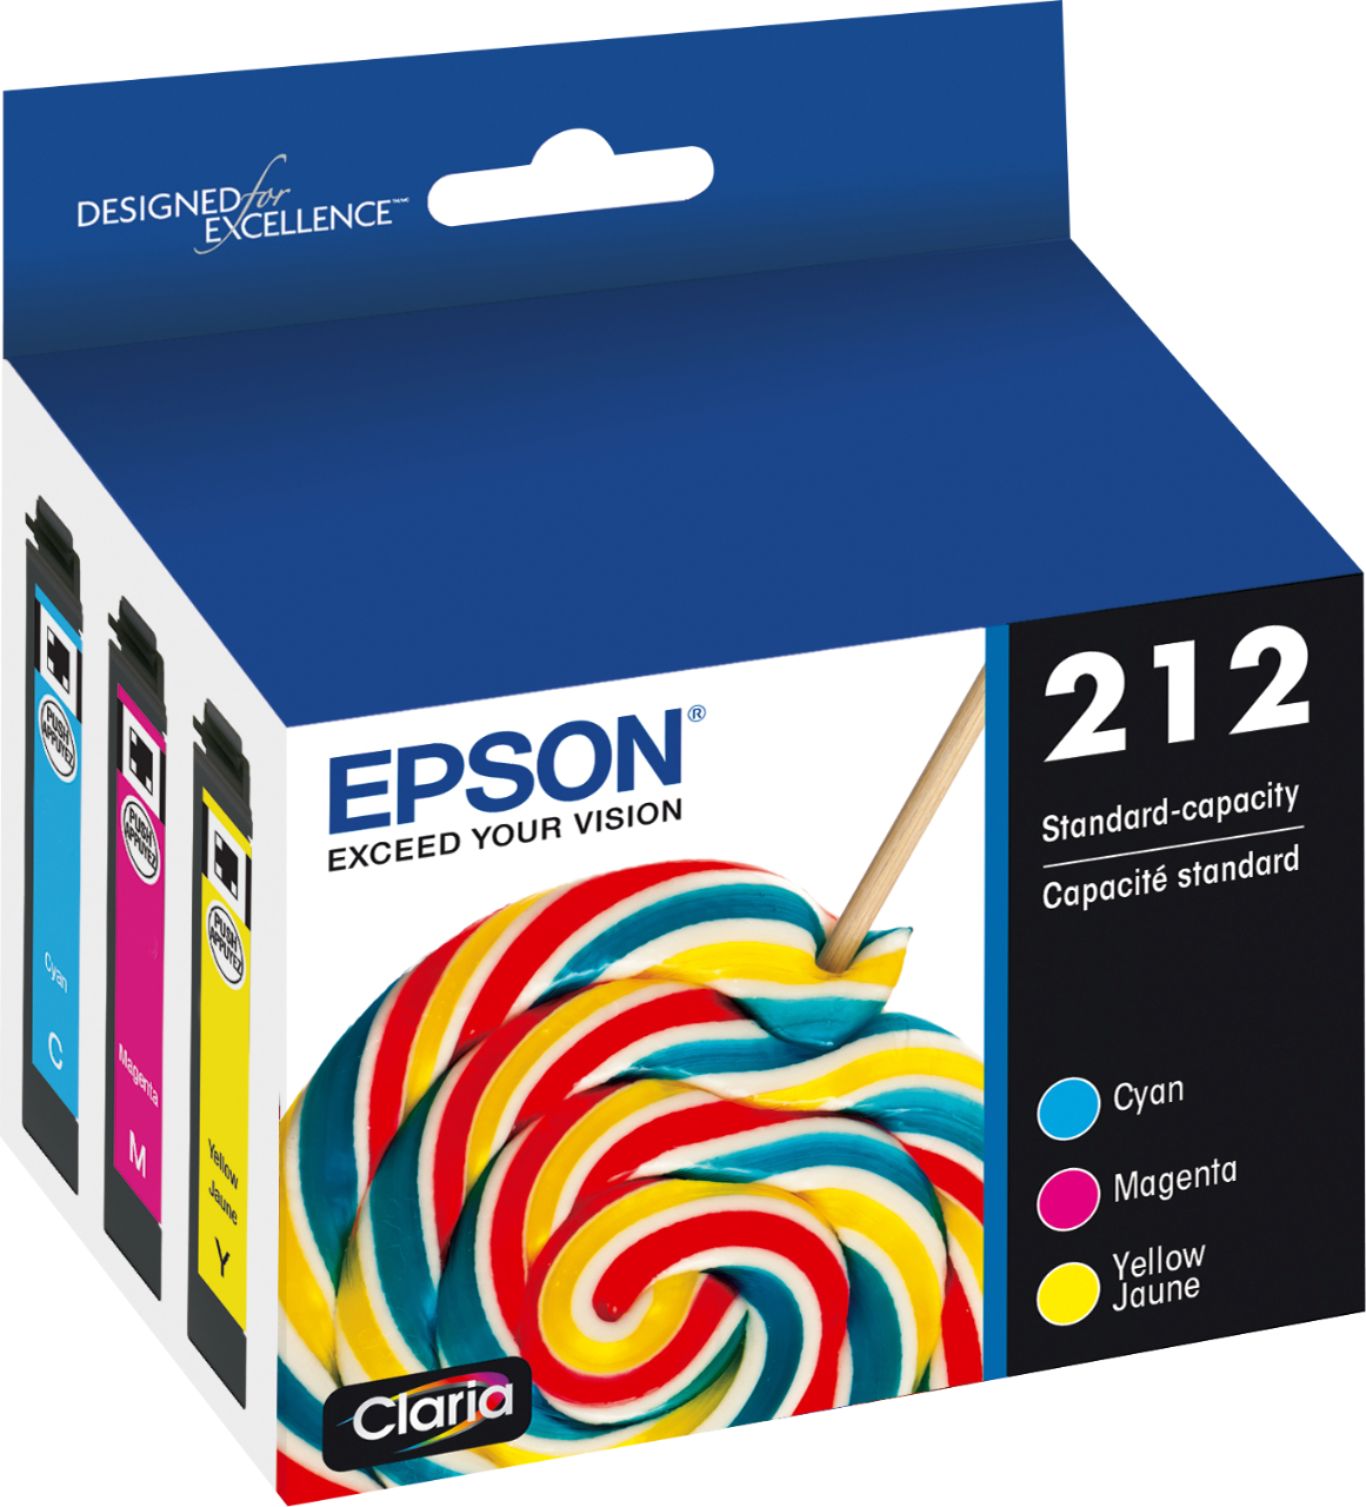 Epson - 212 Multi-pack Standard Capacity Cartridges